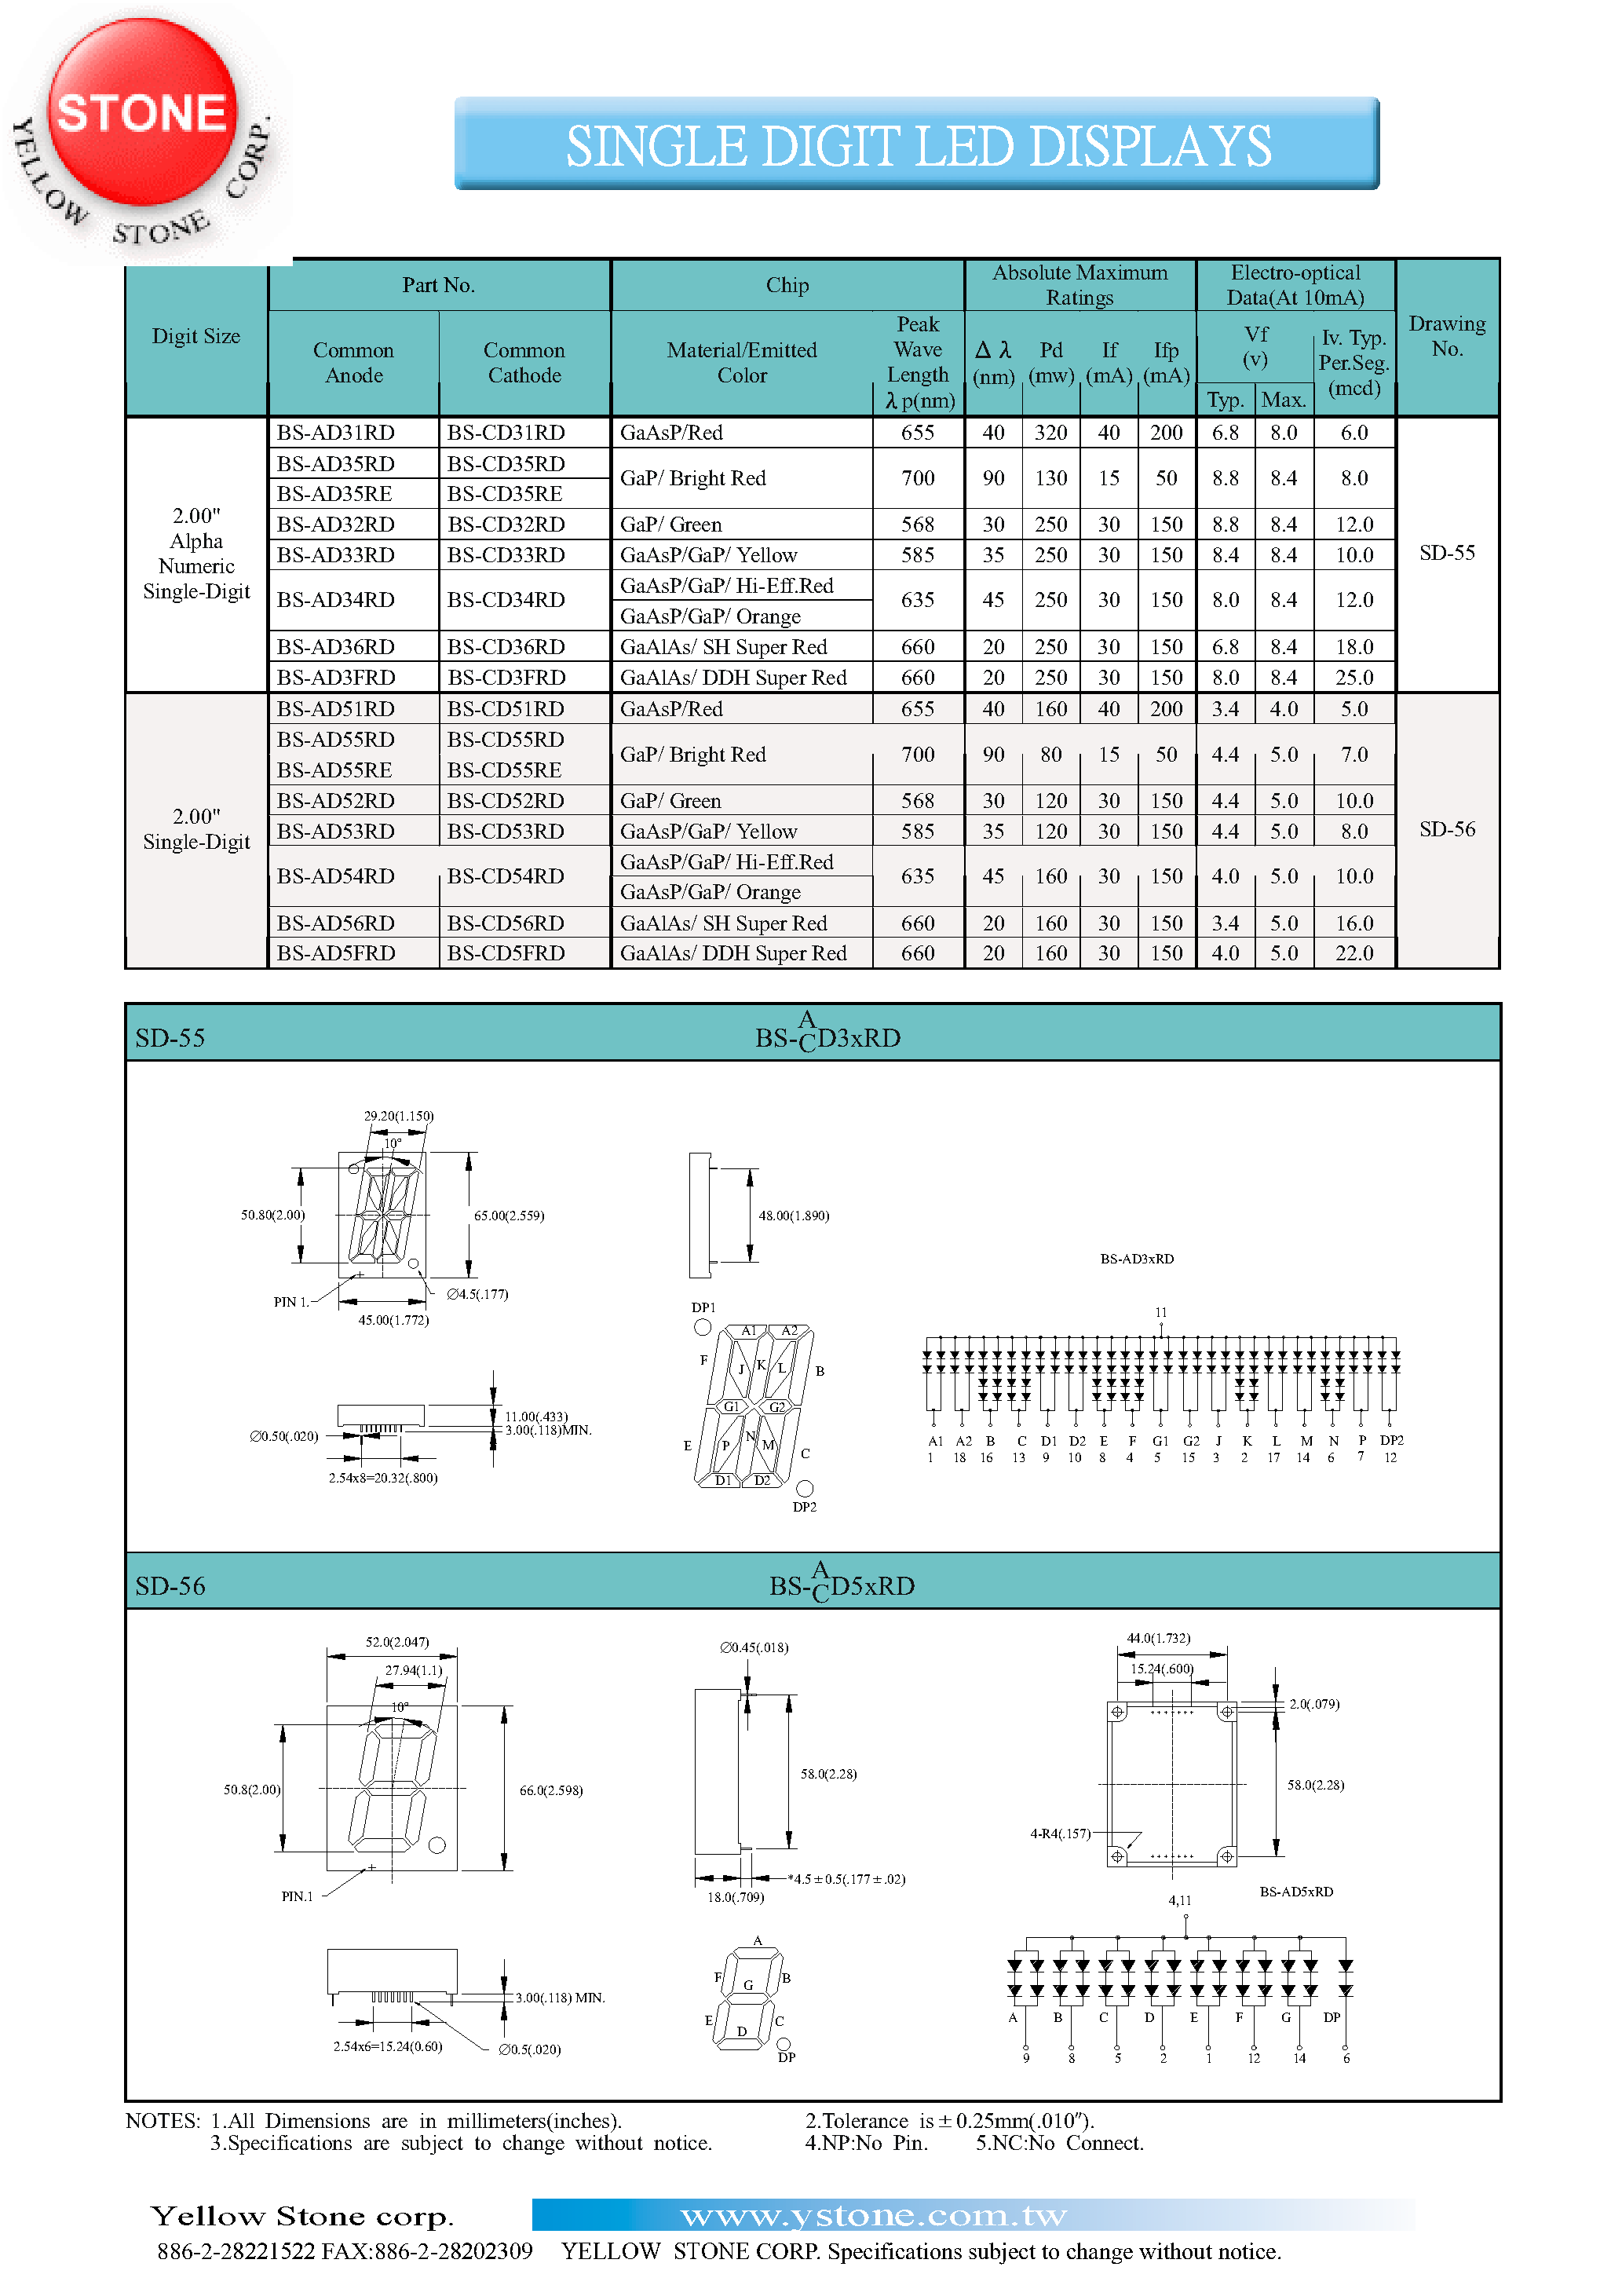 Datasheet BS-AD53RD - SINGLE DIGIT LED DISPLAYS page 1